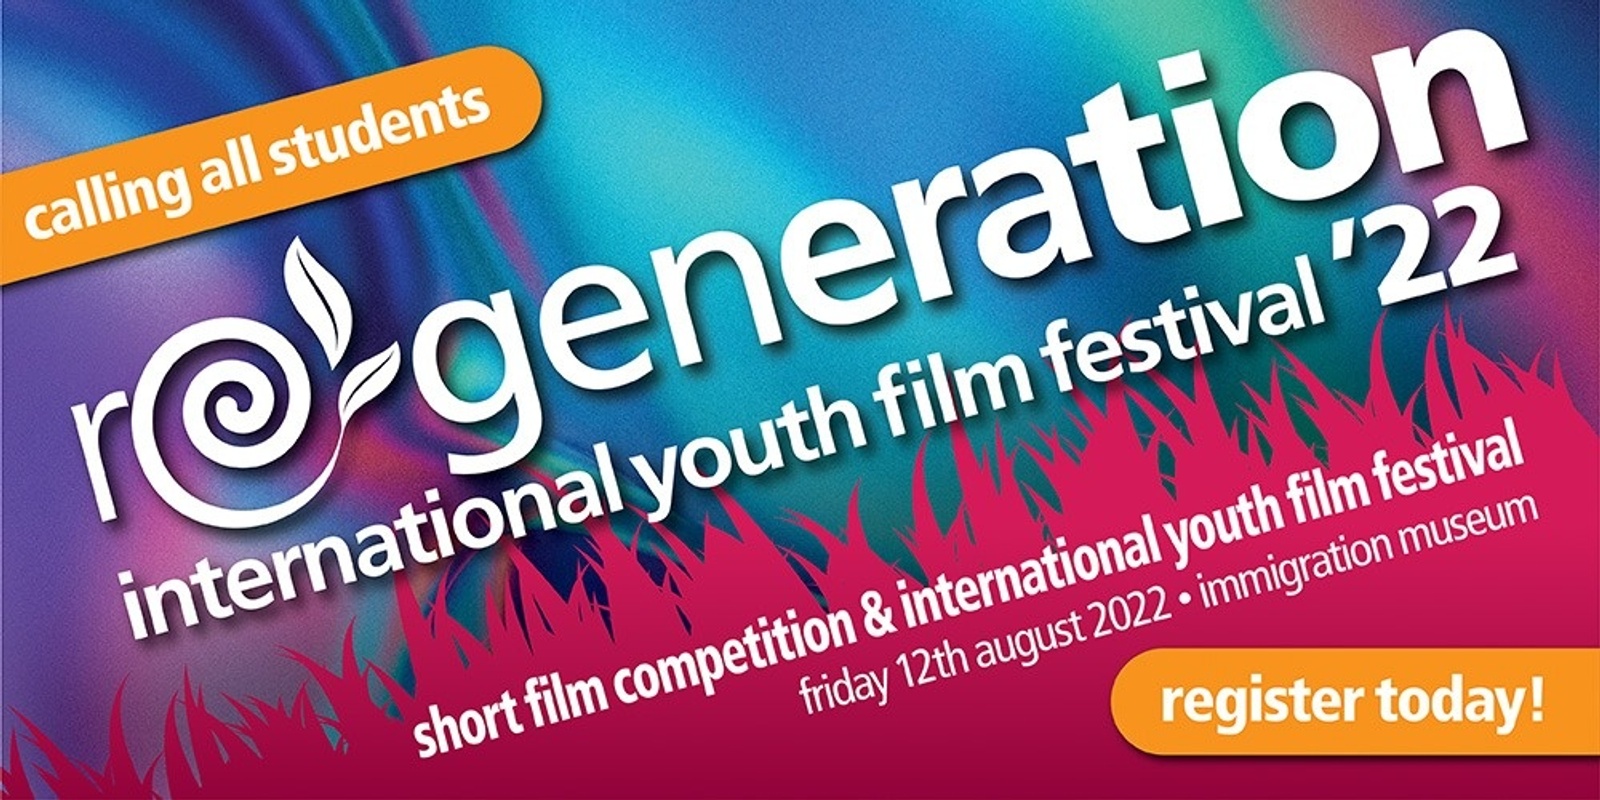 Banner image for  re-generation international youth film festival 22